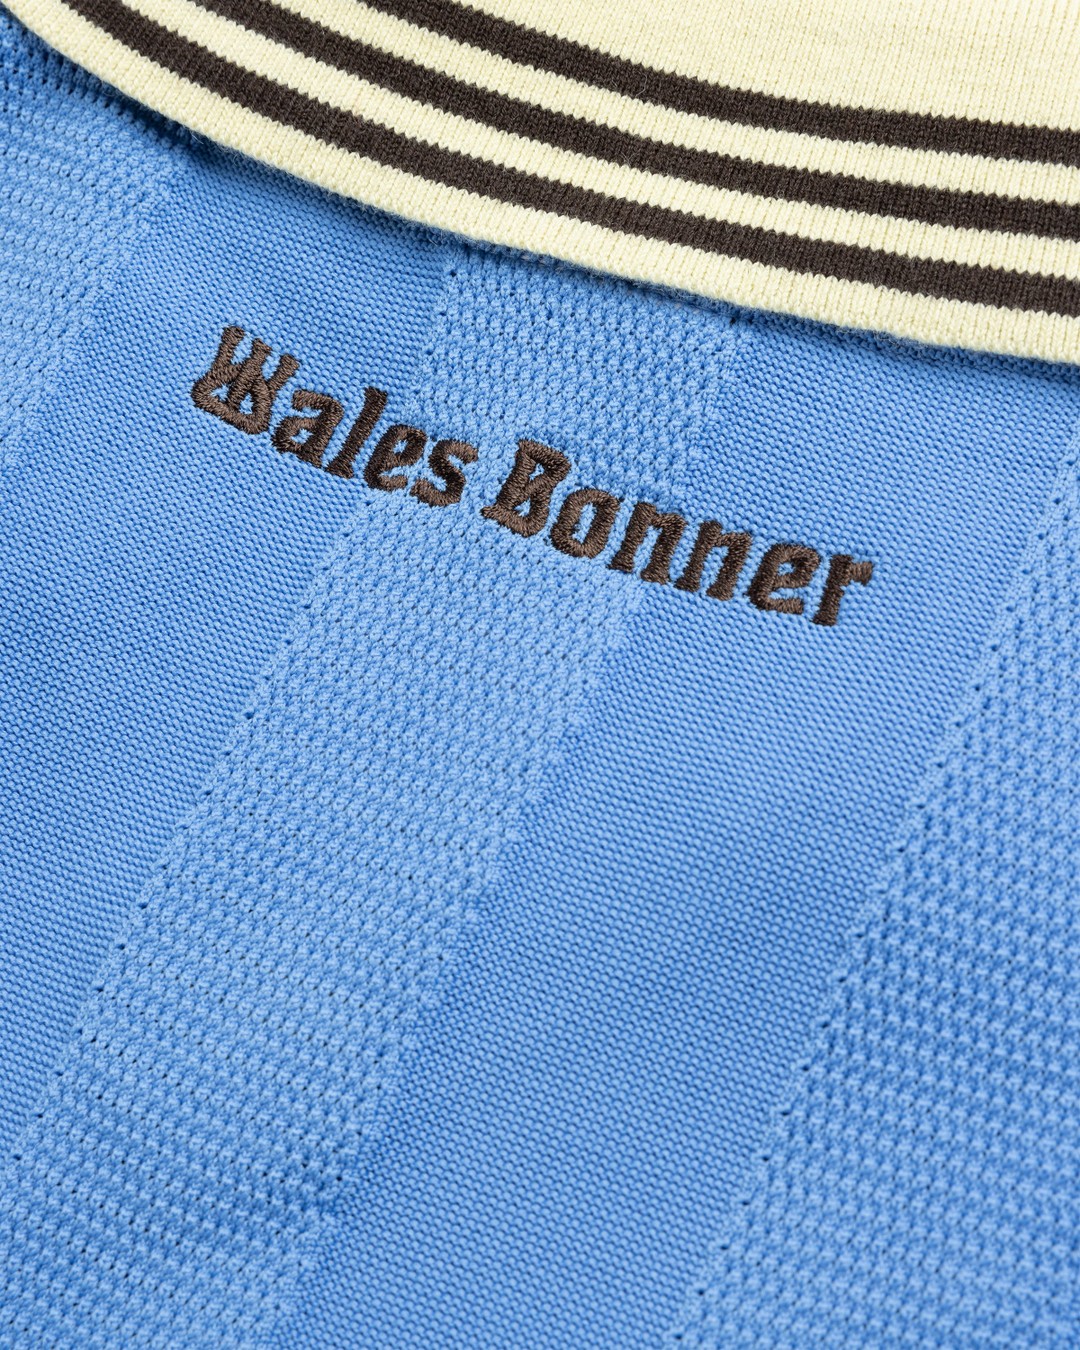 Adidas x Wales Bonner – Knit Football Long-Sleeve Lucky Blue - Longsleeves - Blue - Image 7